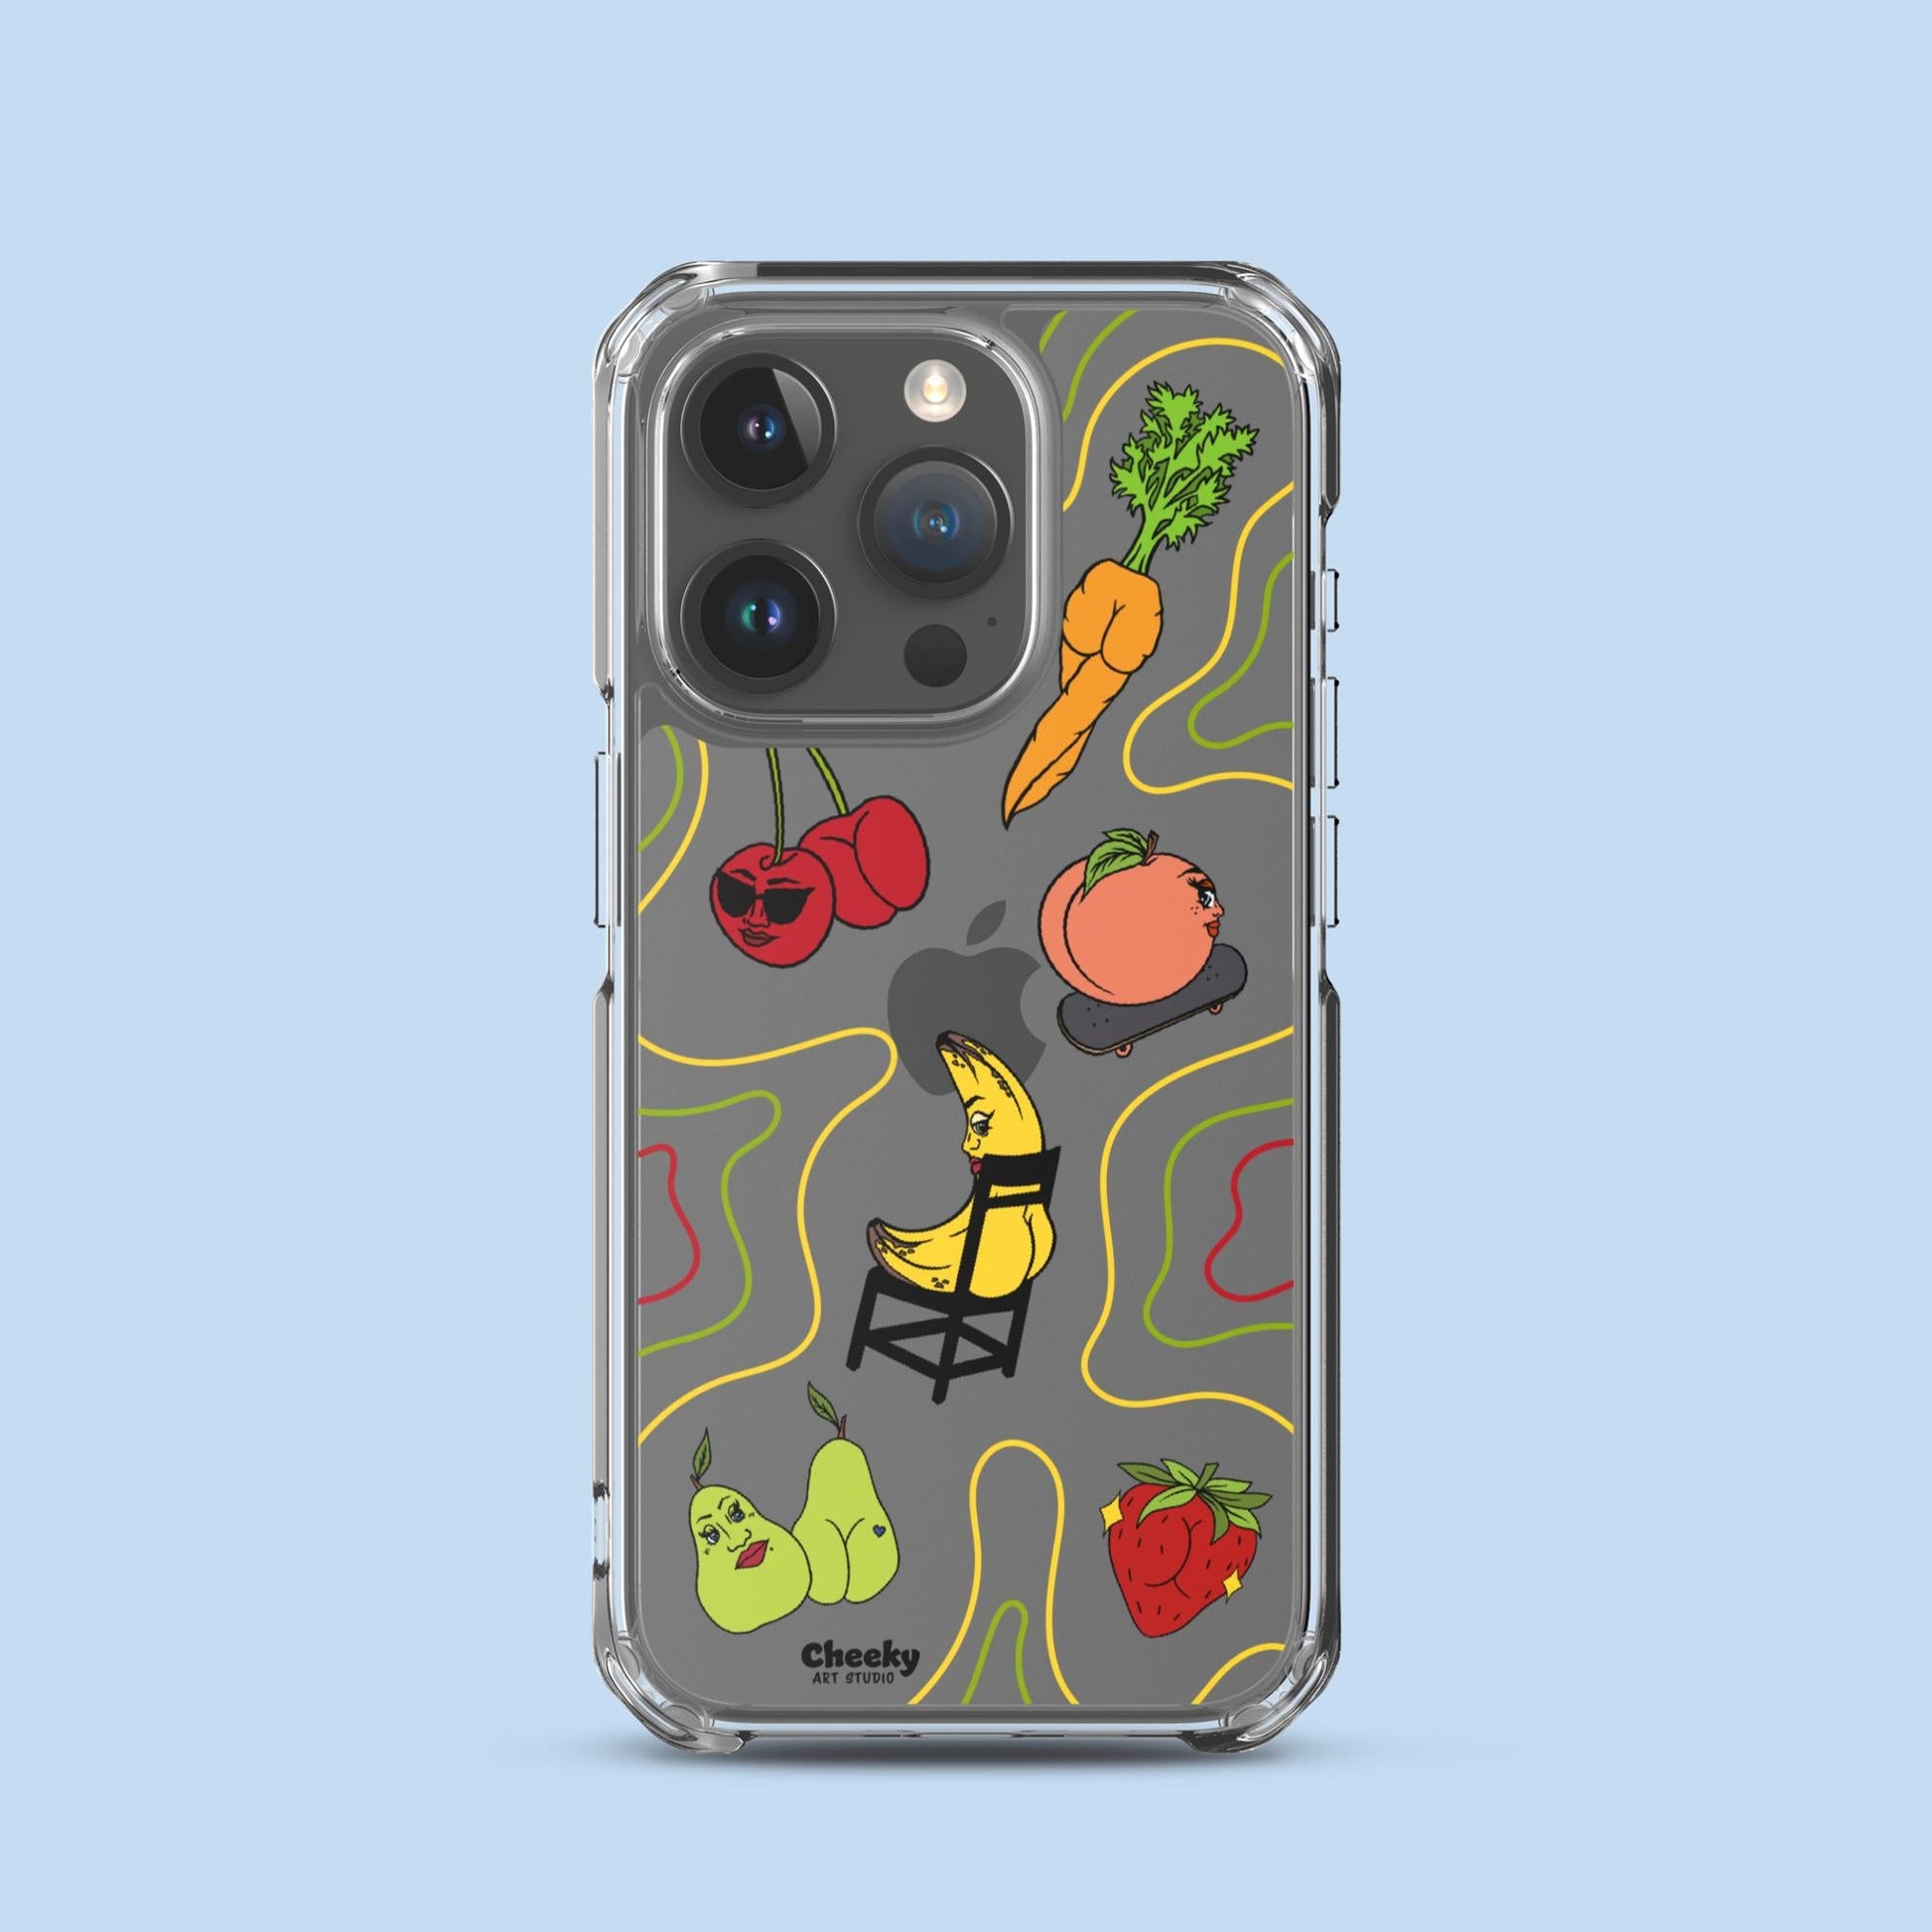 Foodie Booties Clear Phone Case - Cheeky Art Studio-banana-carrot-cherry